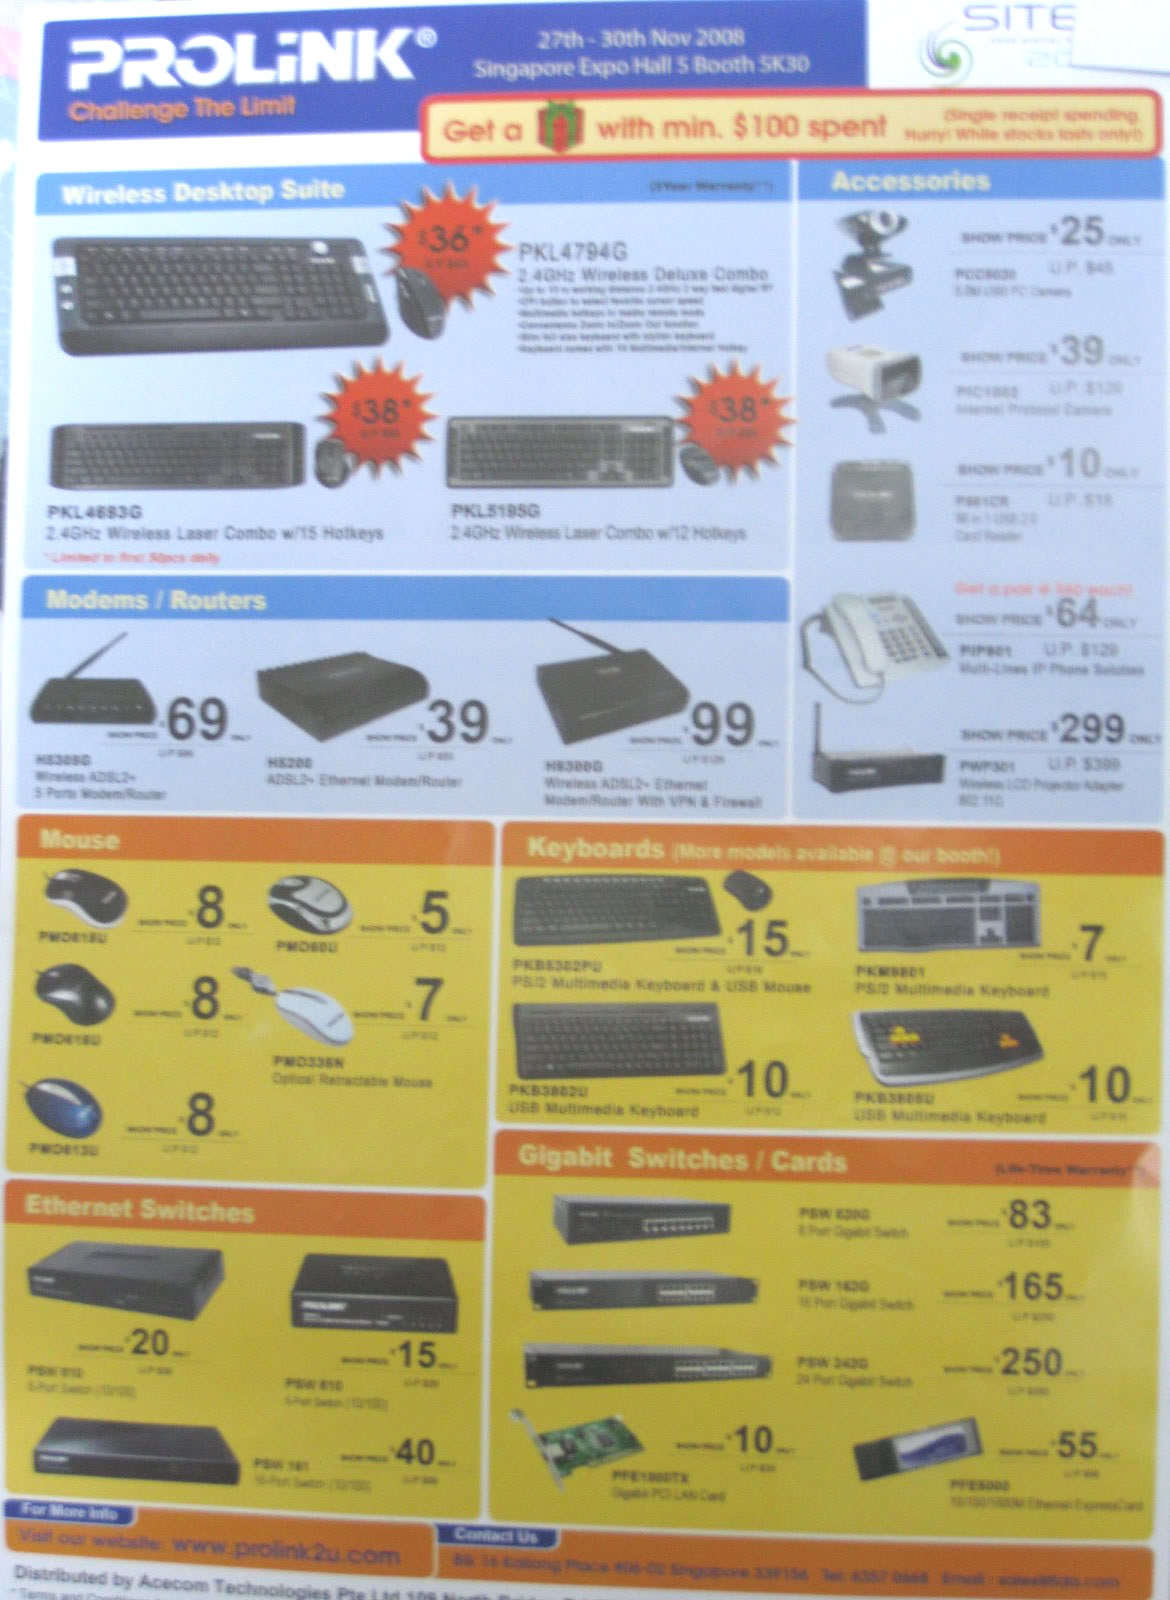 Sitex 2008 price list image brochure of Prolink 1